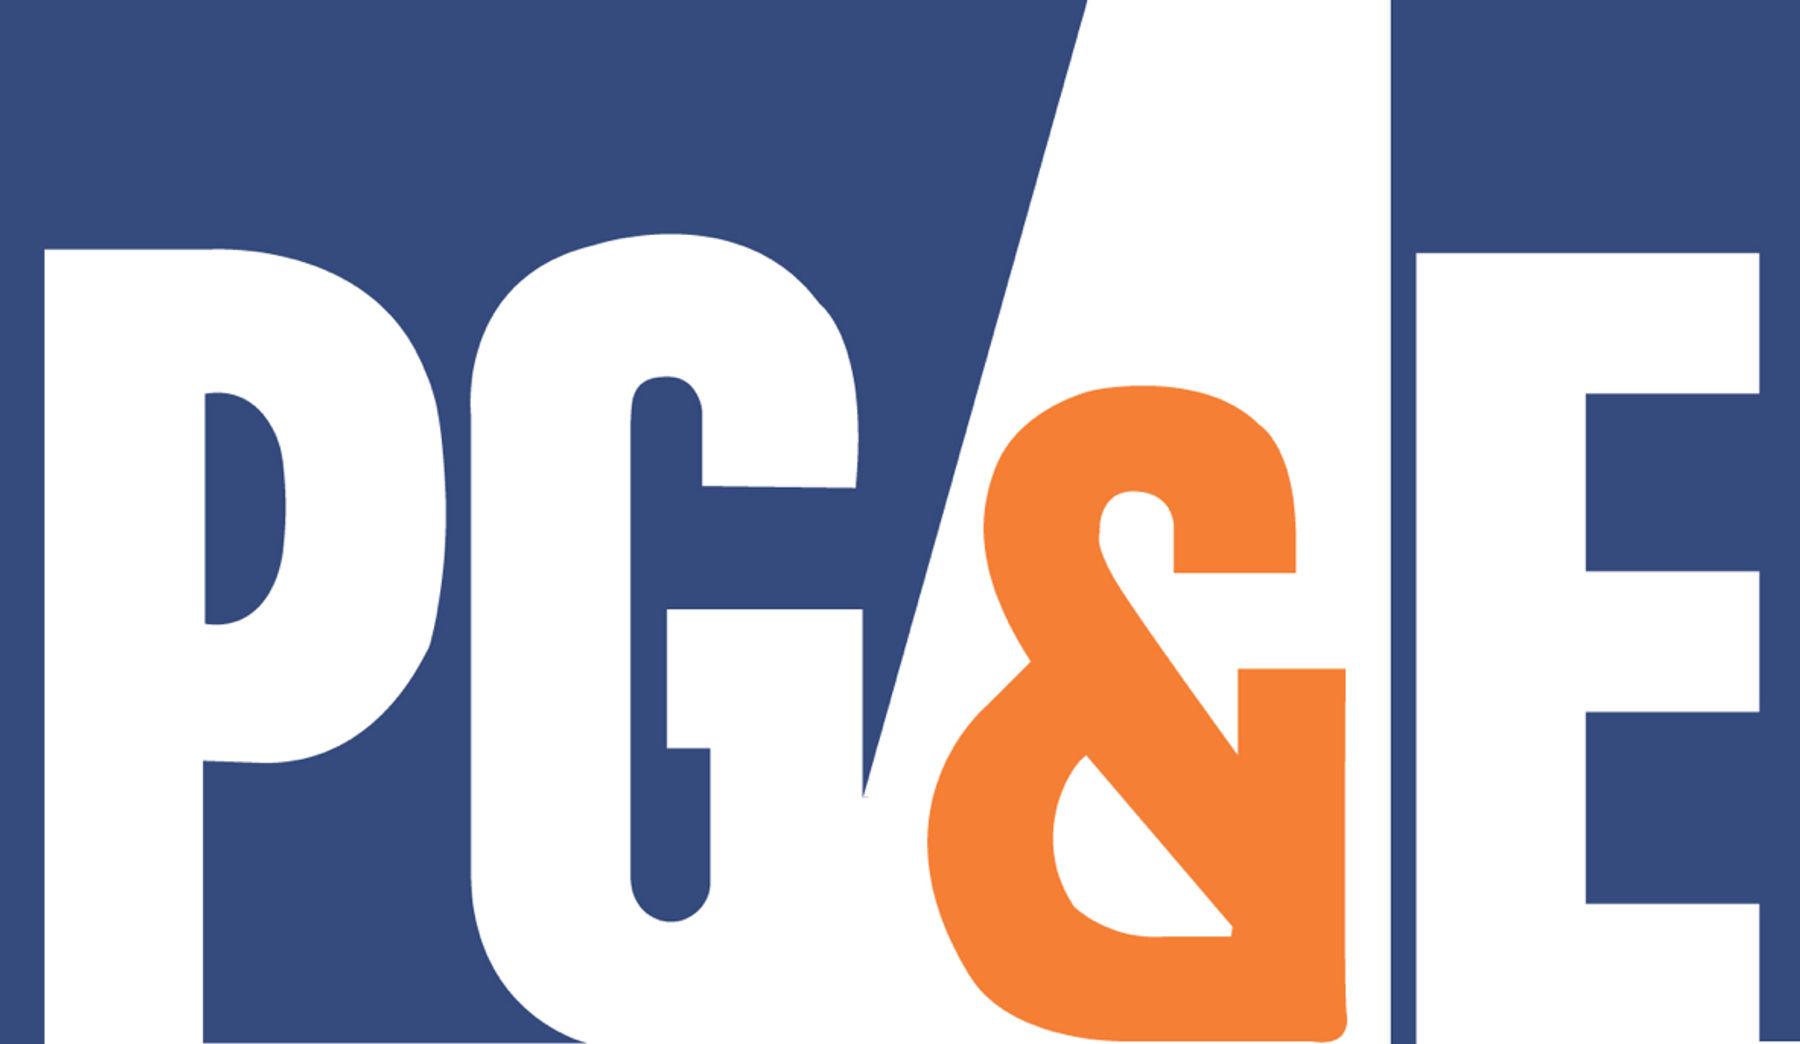 Pacific Gas & Electric Company - PG&E